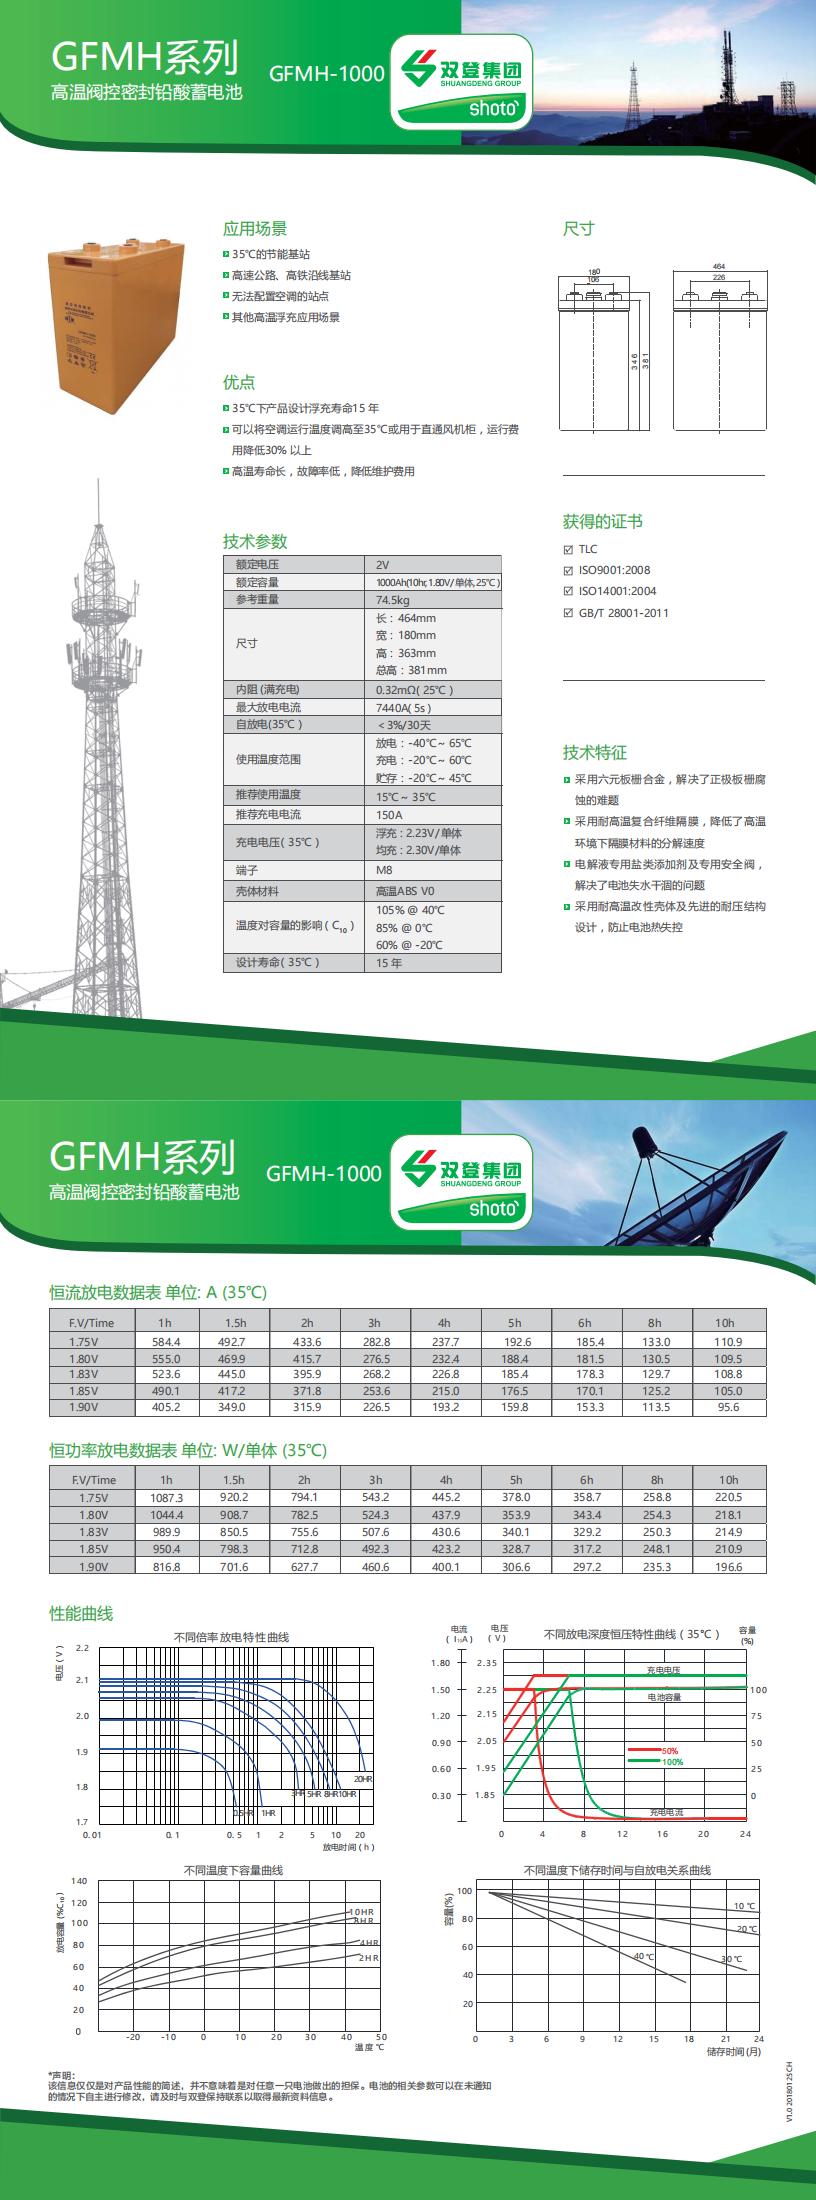 GFMH-1000中文_00.jpg